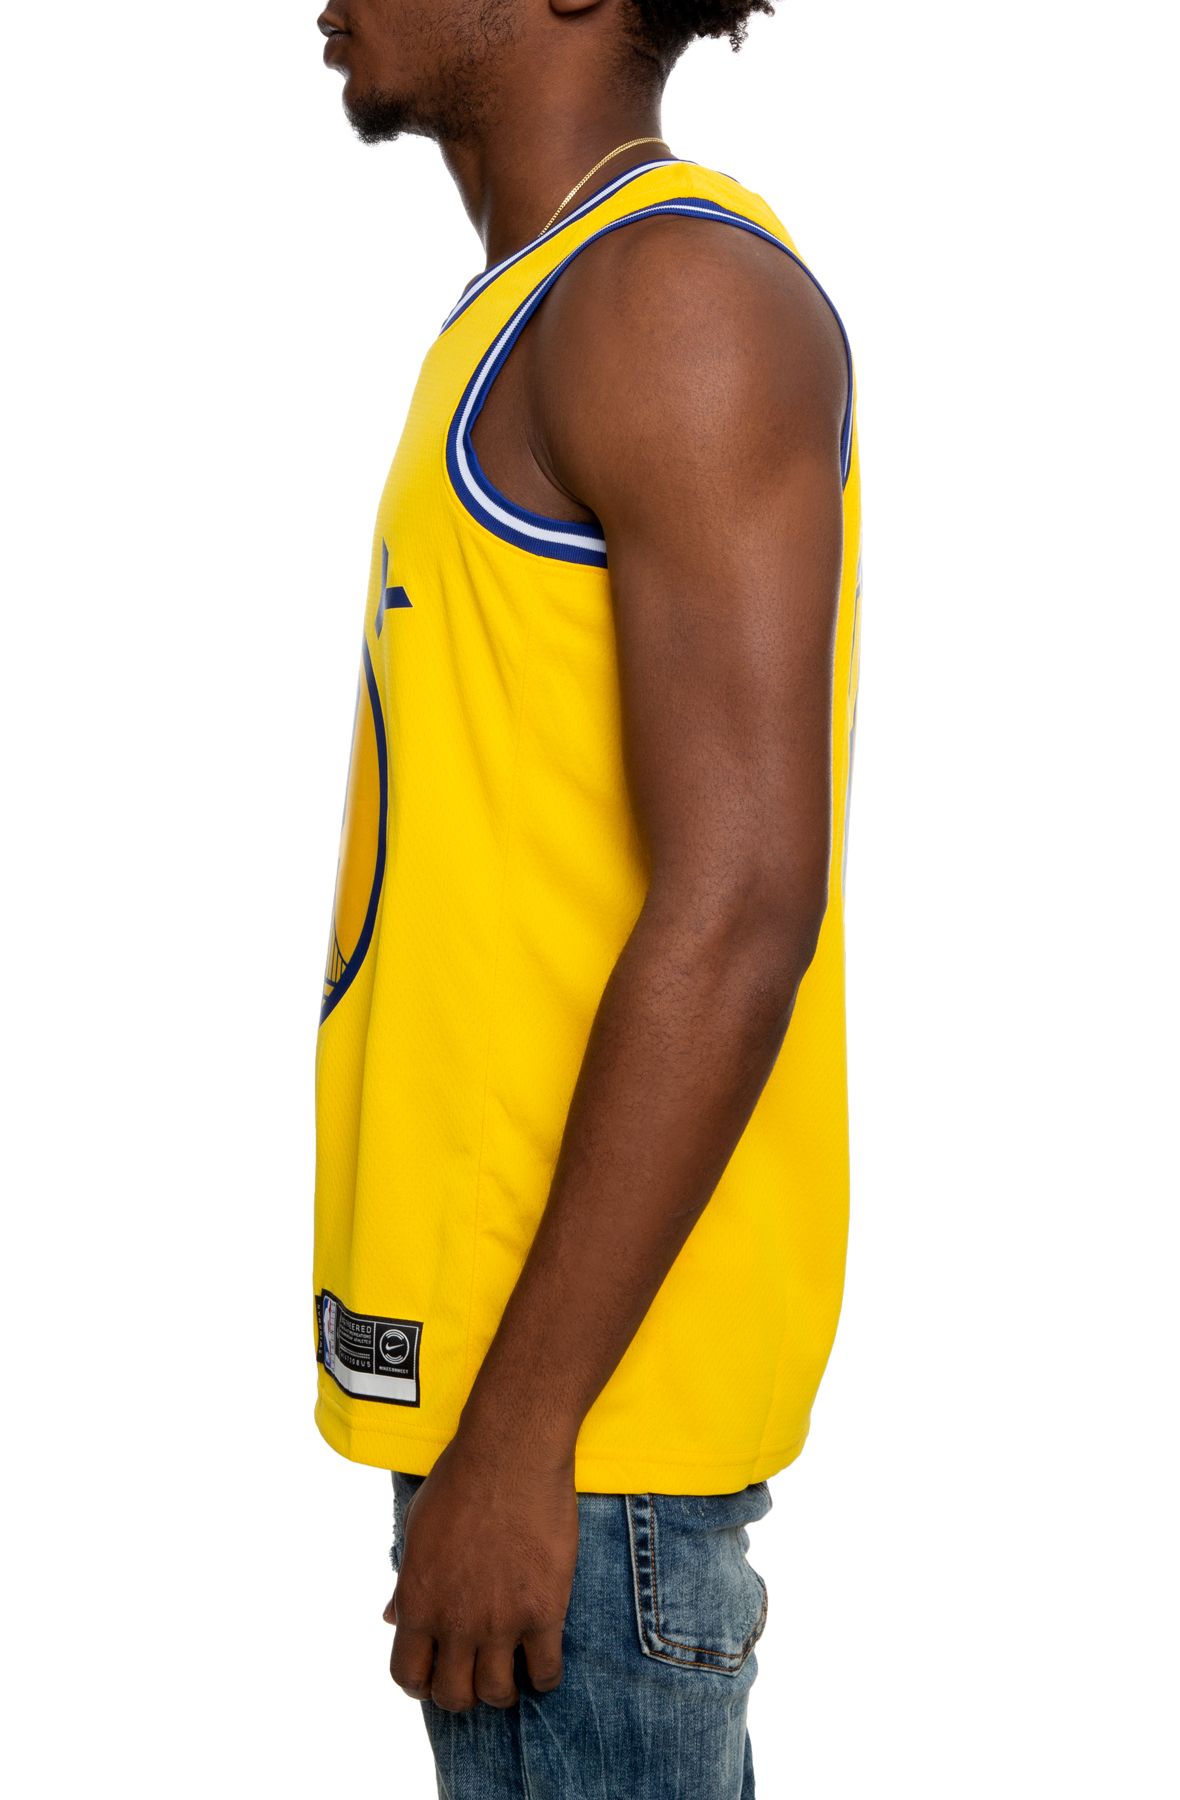 Nike Men's Golden State Warriors Stephen Curry #30 Blue Hardwood Classic  Dri-FIT Swingman Jersey